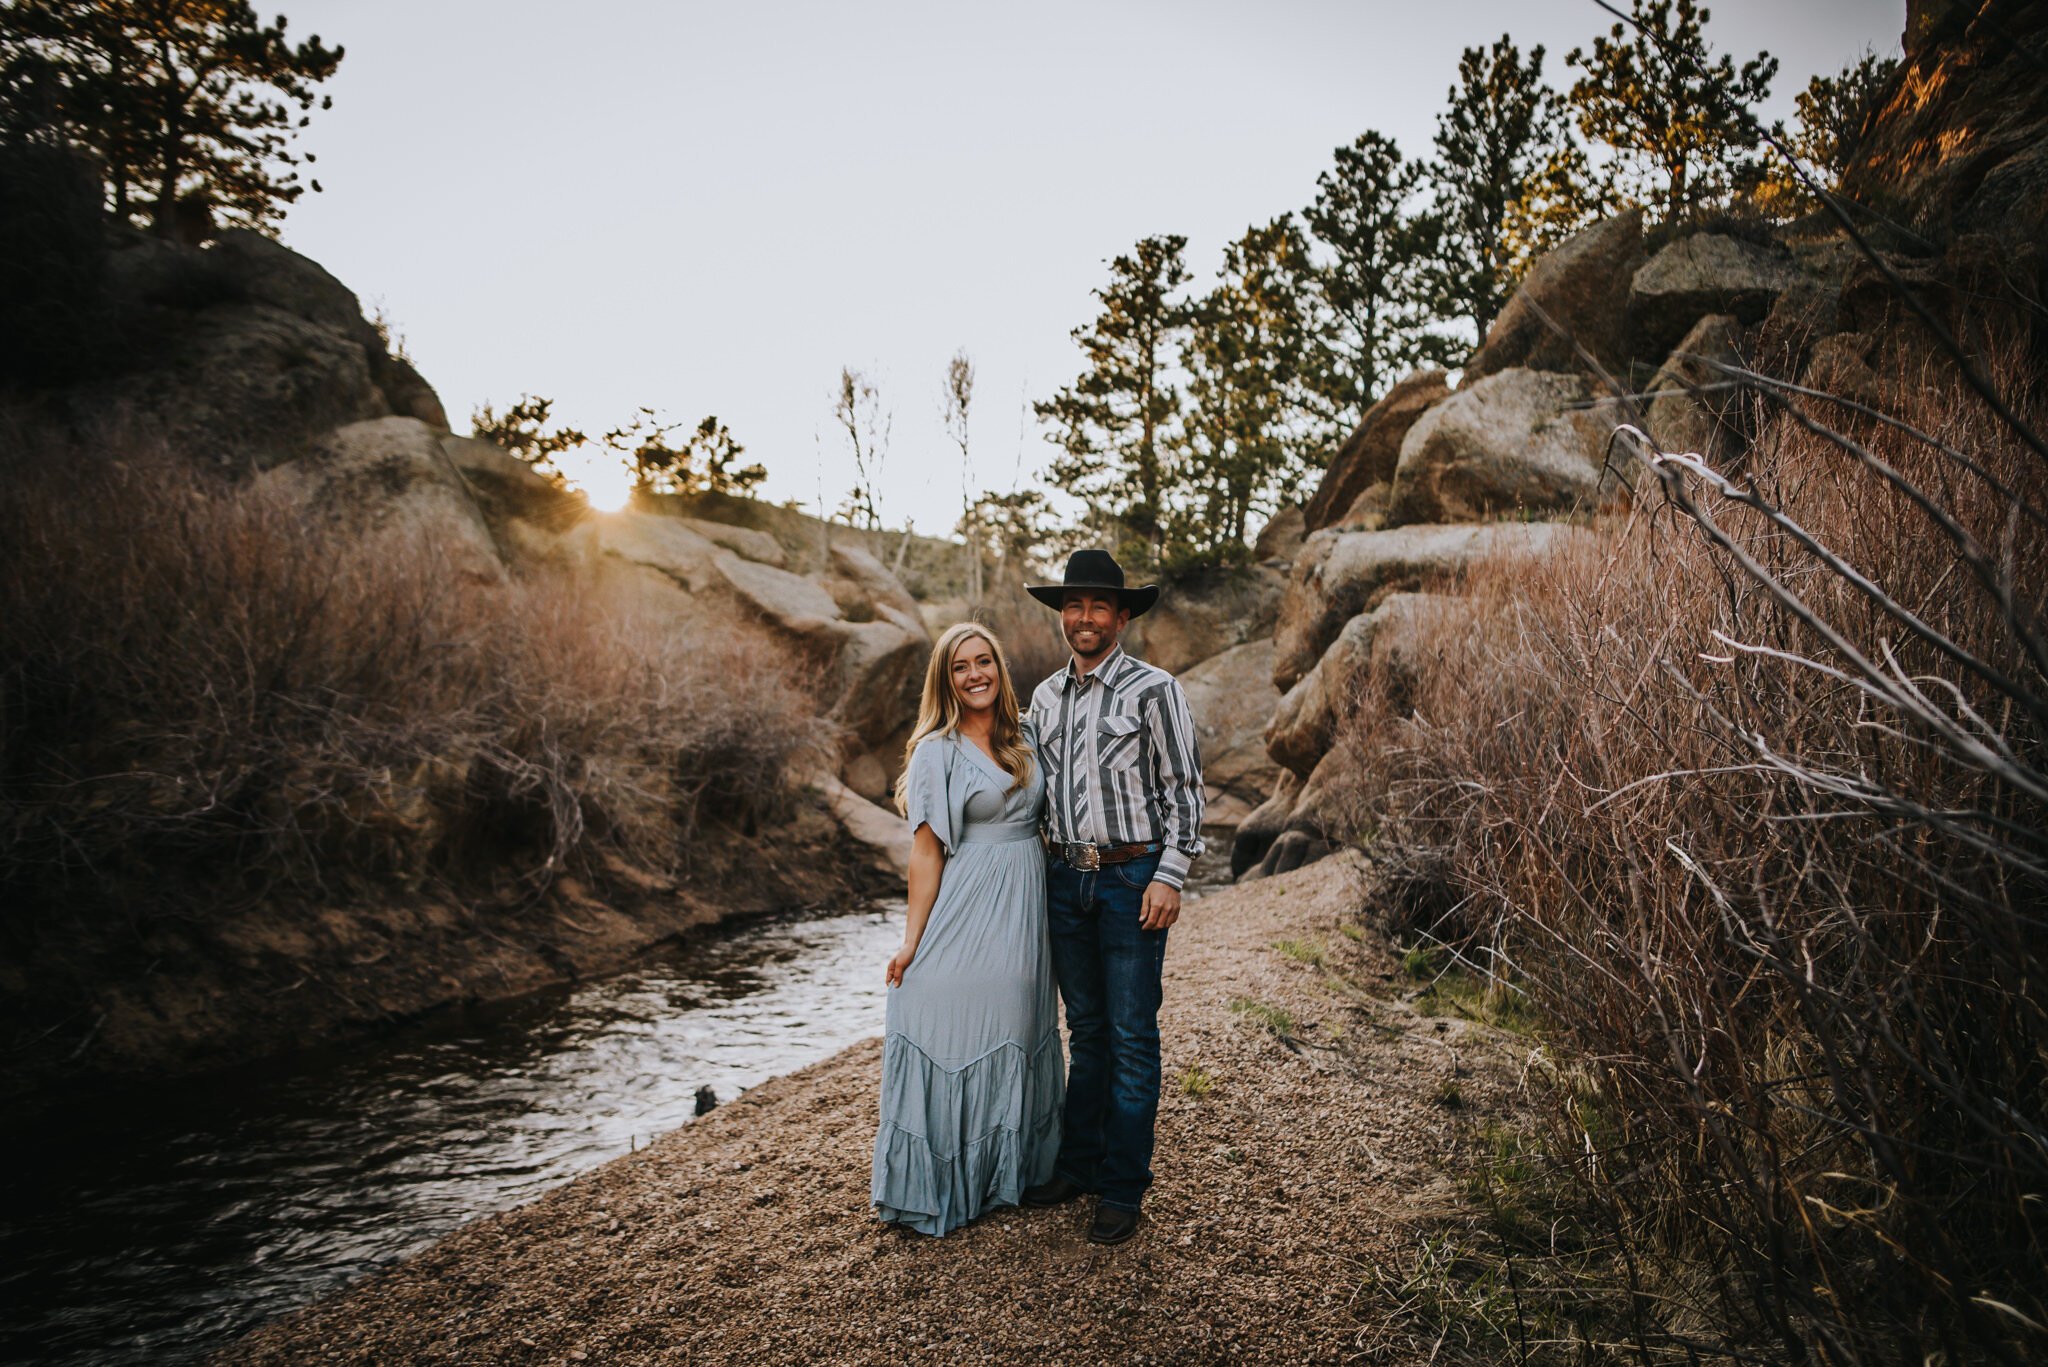 Shelby+and+Brady+Engagement+Session+Cheyenne+Wyoming+Sunset+Water+Fields+Rocks+Nature+Colorado+Photographer+Wild+Prairie+Photography-09-2020.jpeg